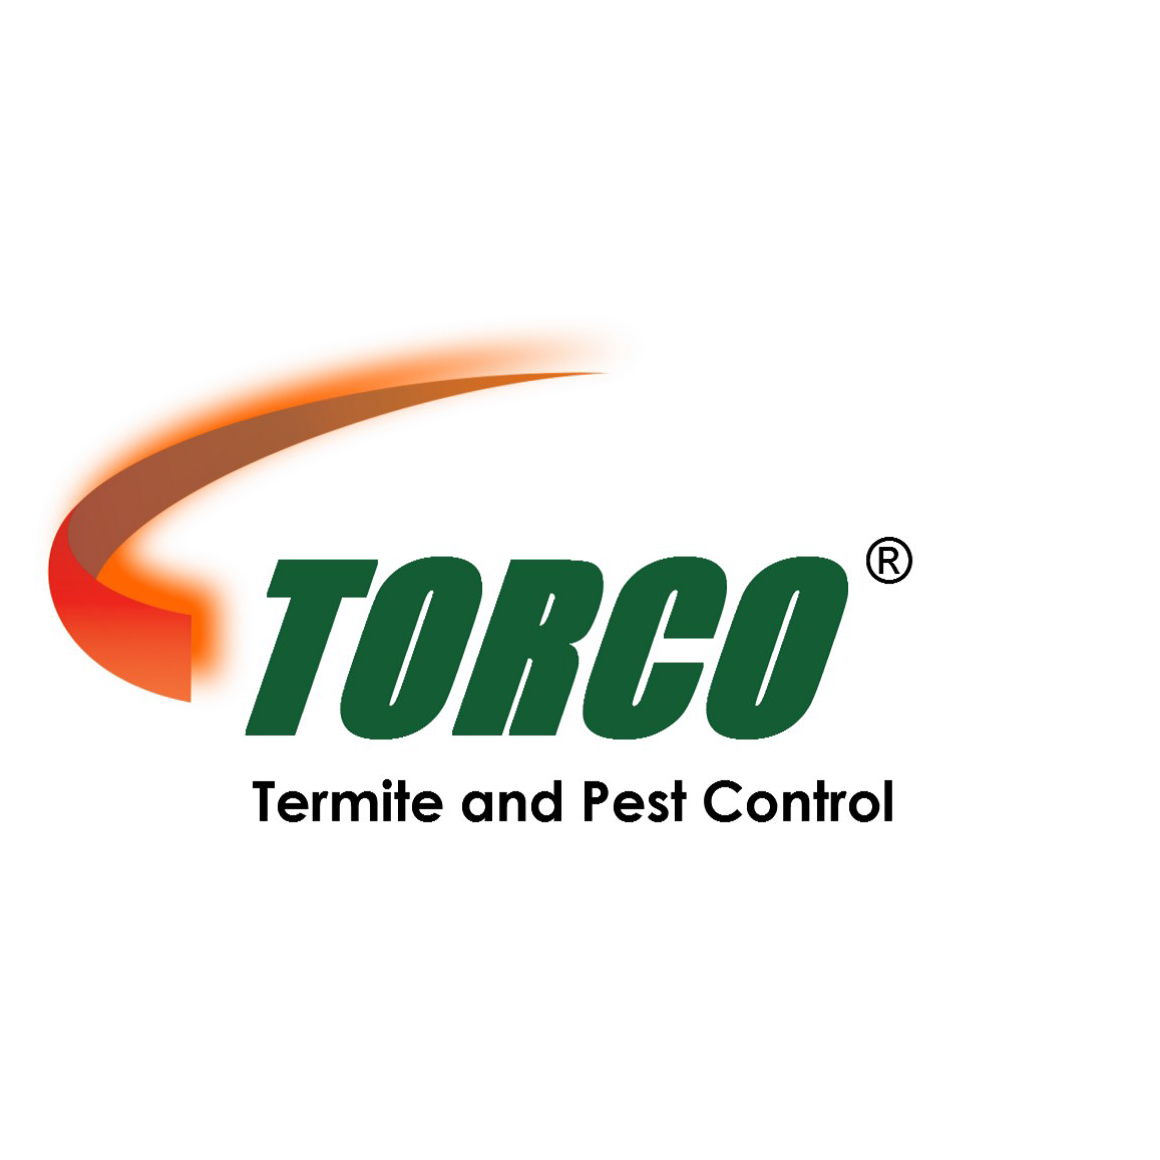 TORCO™ Termite and Pest Control Company Logo